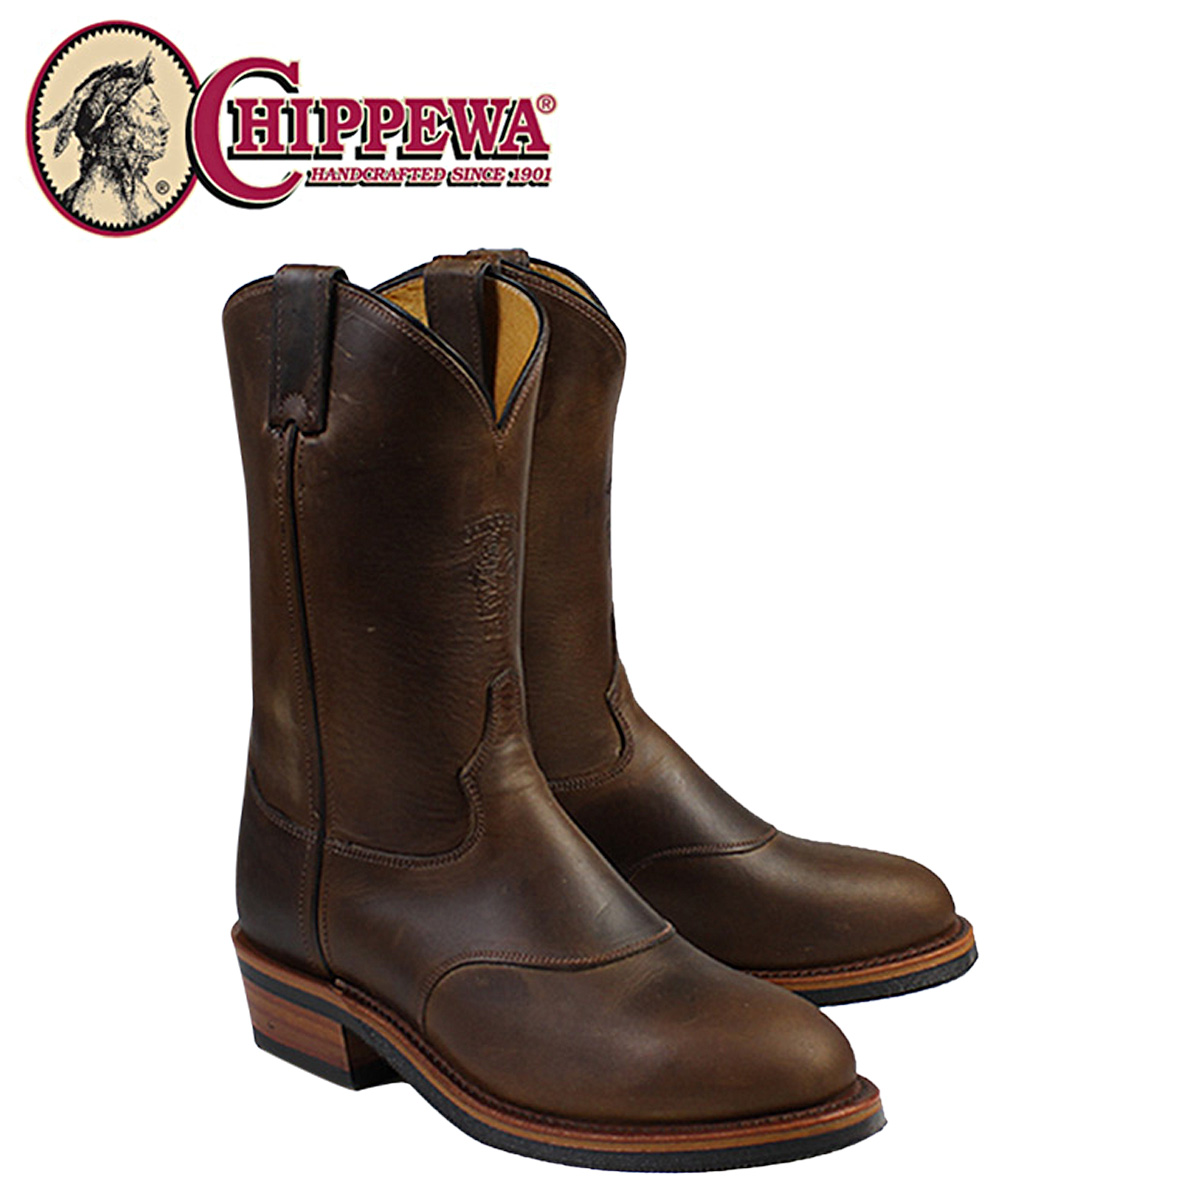 chippewa cowboy work boots